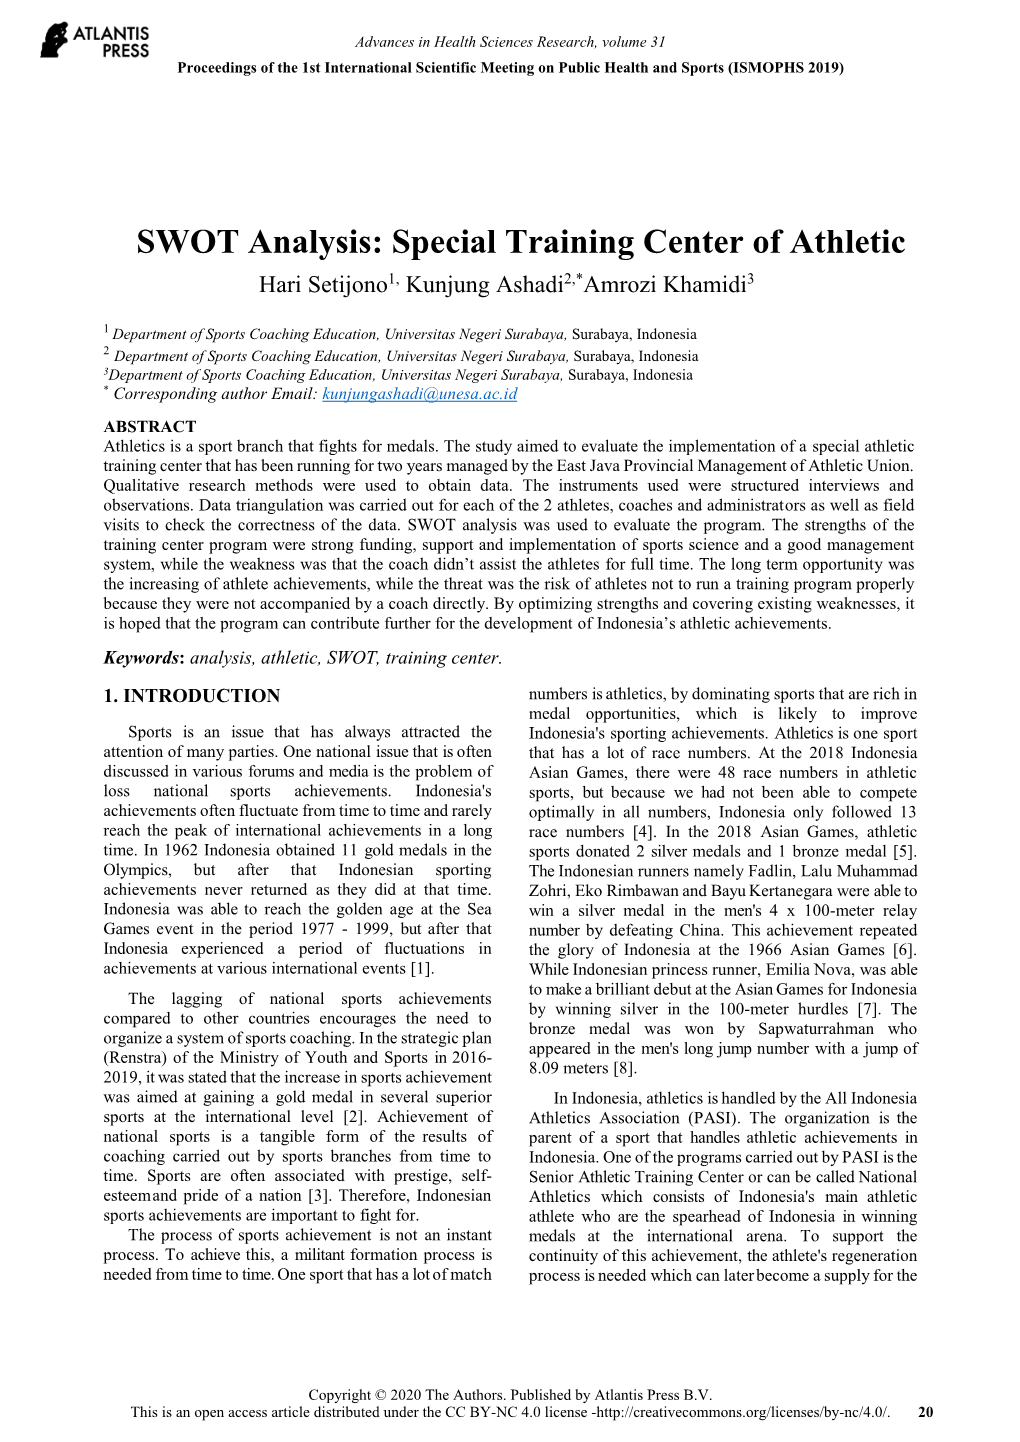 SWOT Analysis: Special Training Center of Athletic Hari Setijono1, Kunjung Ashadi2,*Amrozi Khamidi3